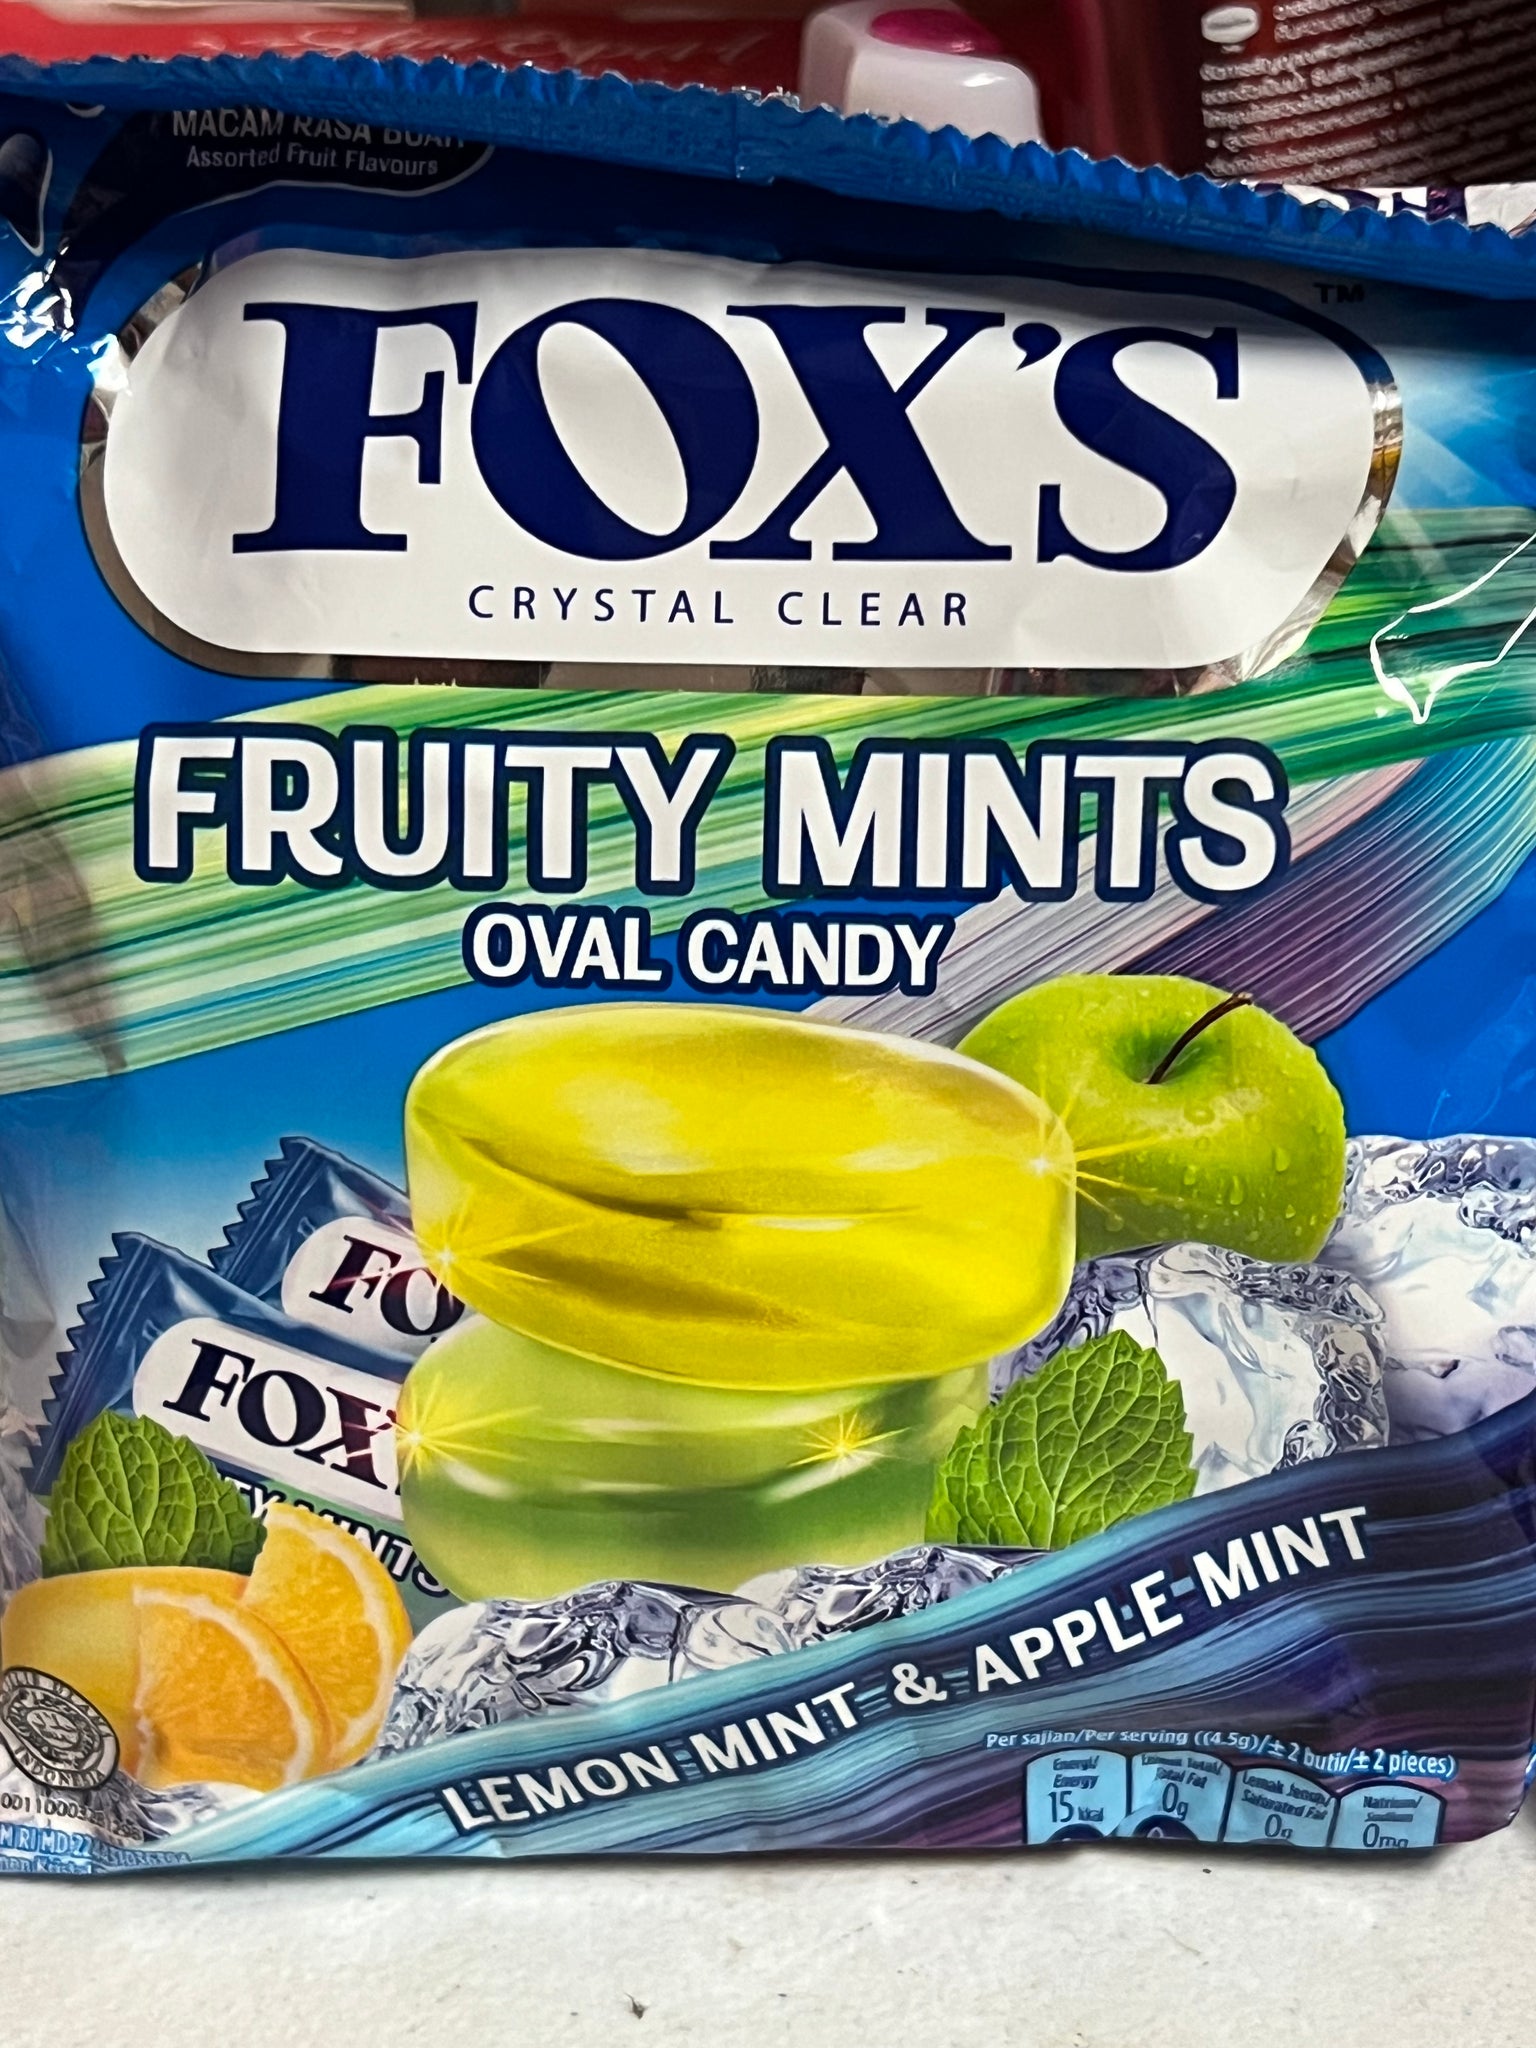 Fox's Crystal Clear Fruity Mints Oval